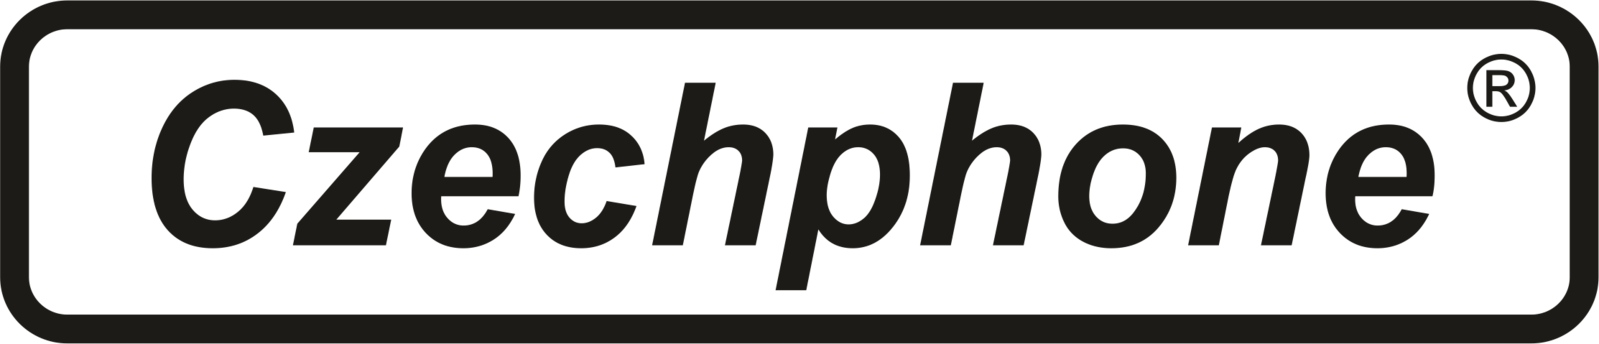 logo-czechphone--cerne--obrysy.png